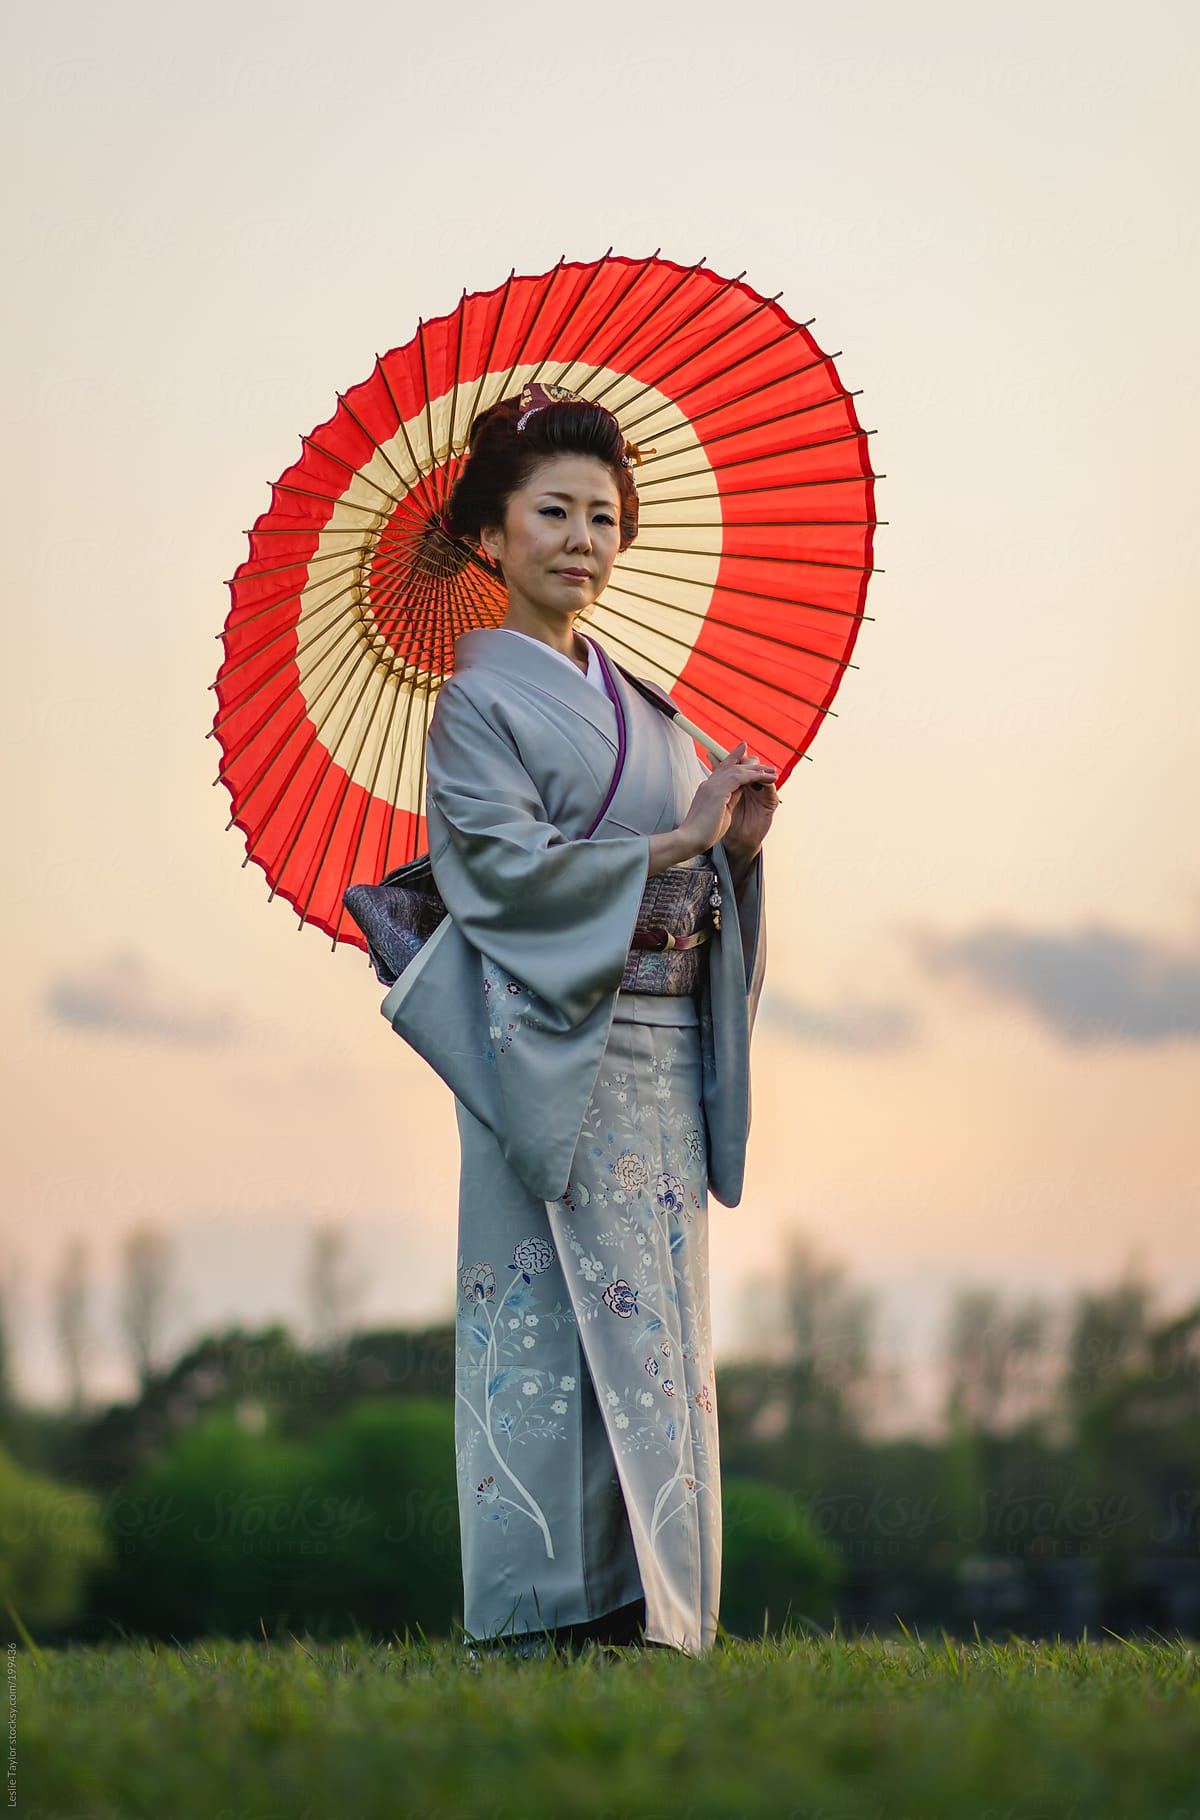 plads Slør Kassér Japanese Woman Wearing Kimono And Holding Traditional Umbrella" by Stocksy  Contributor "Leslie Taylor" - Stocksy